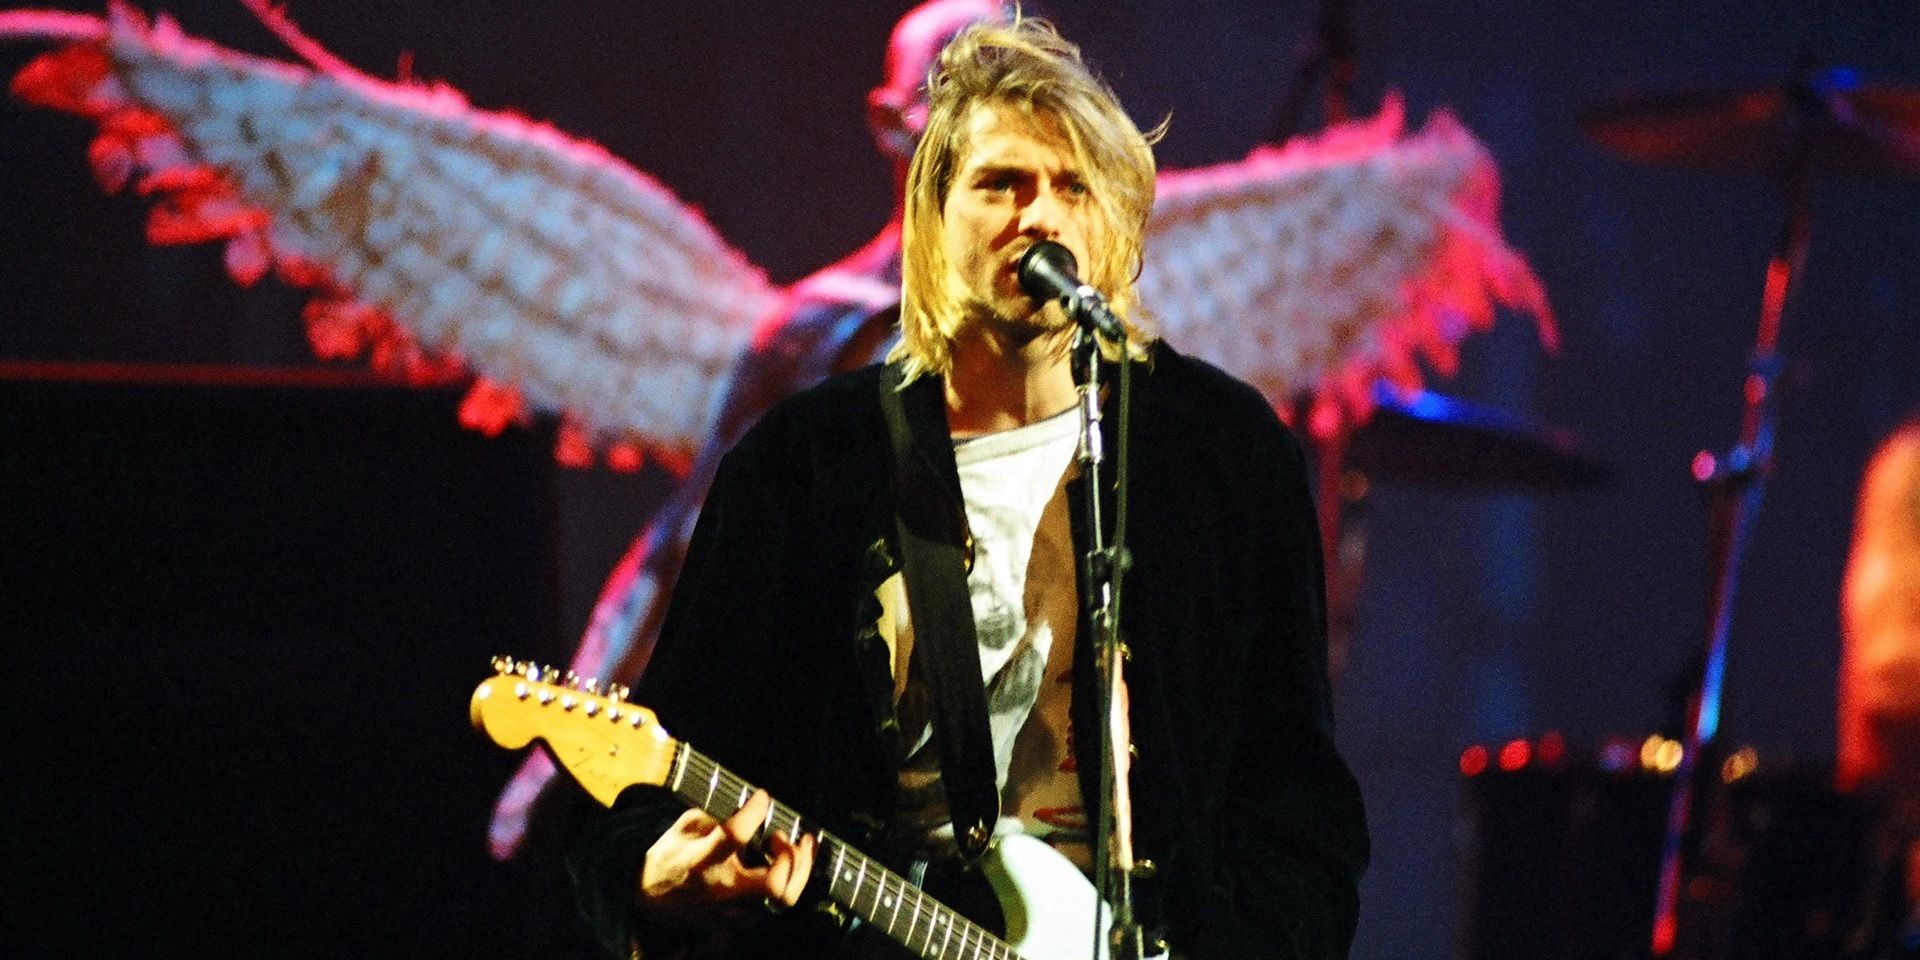 Kurt Cobain playing on stage